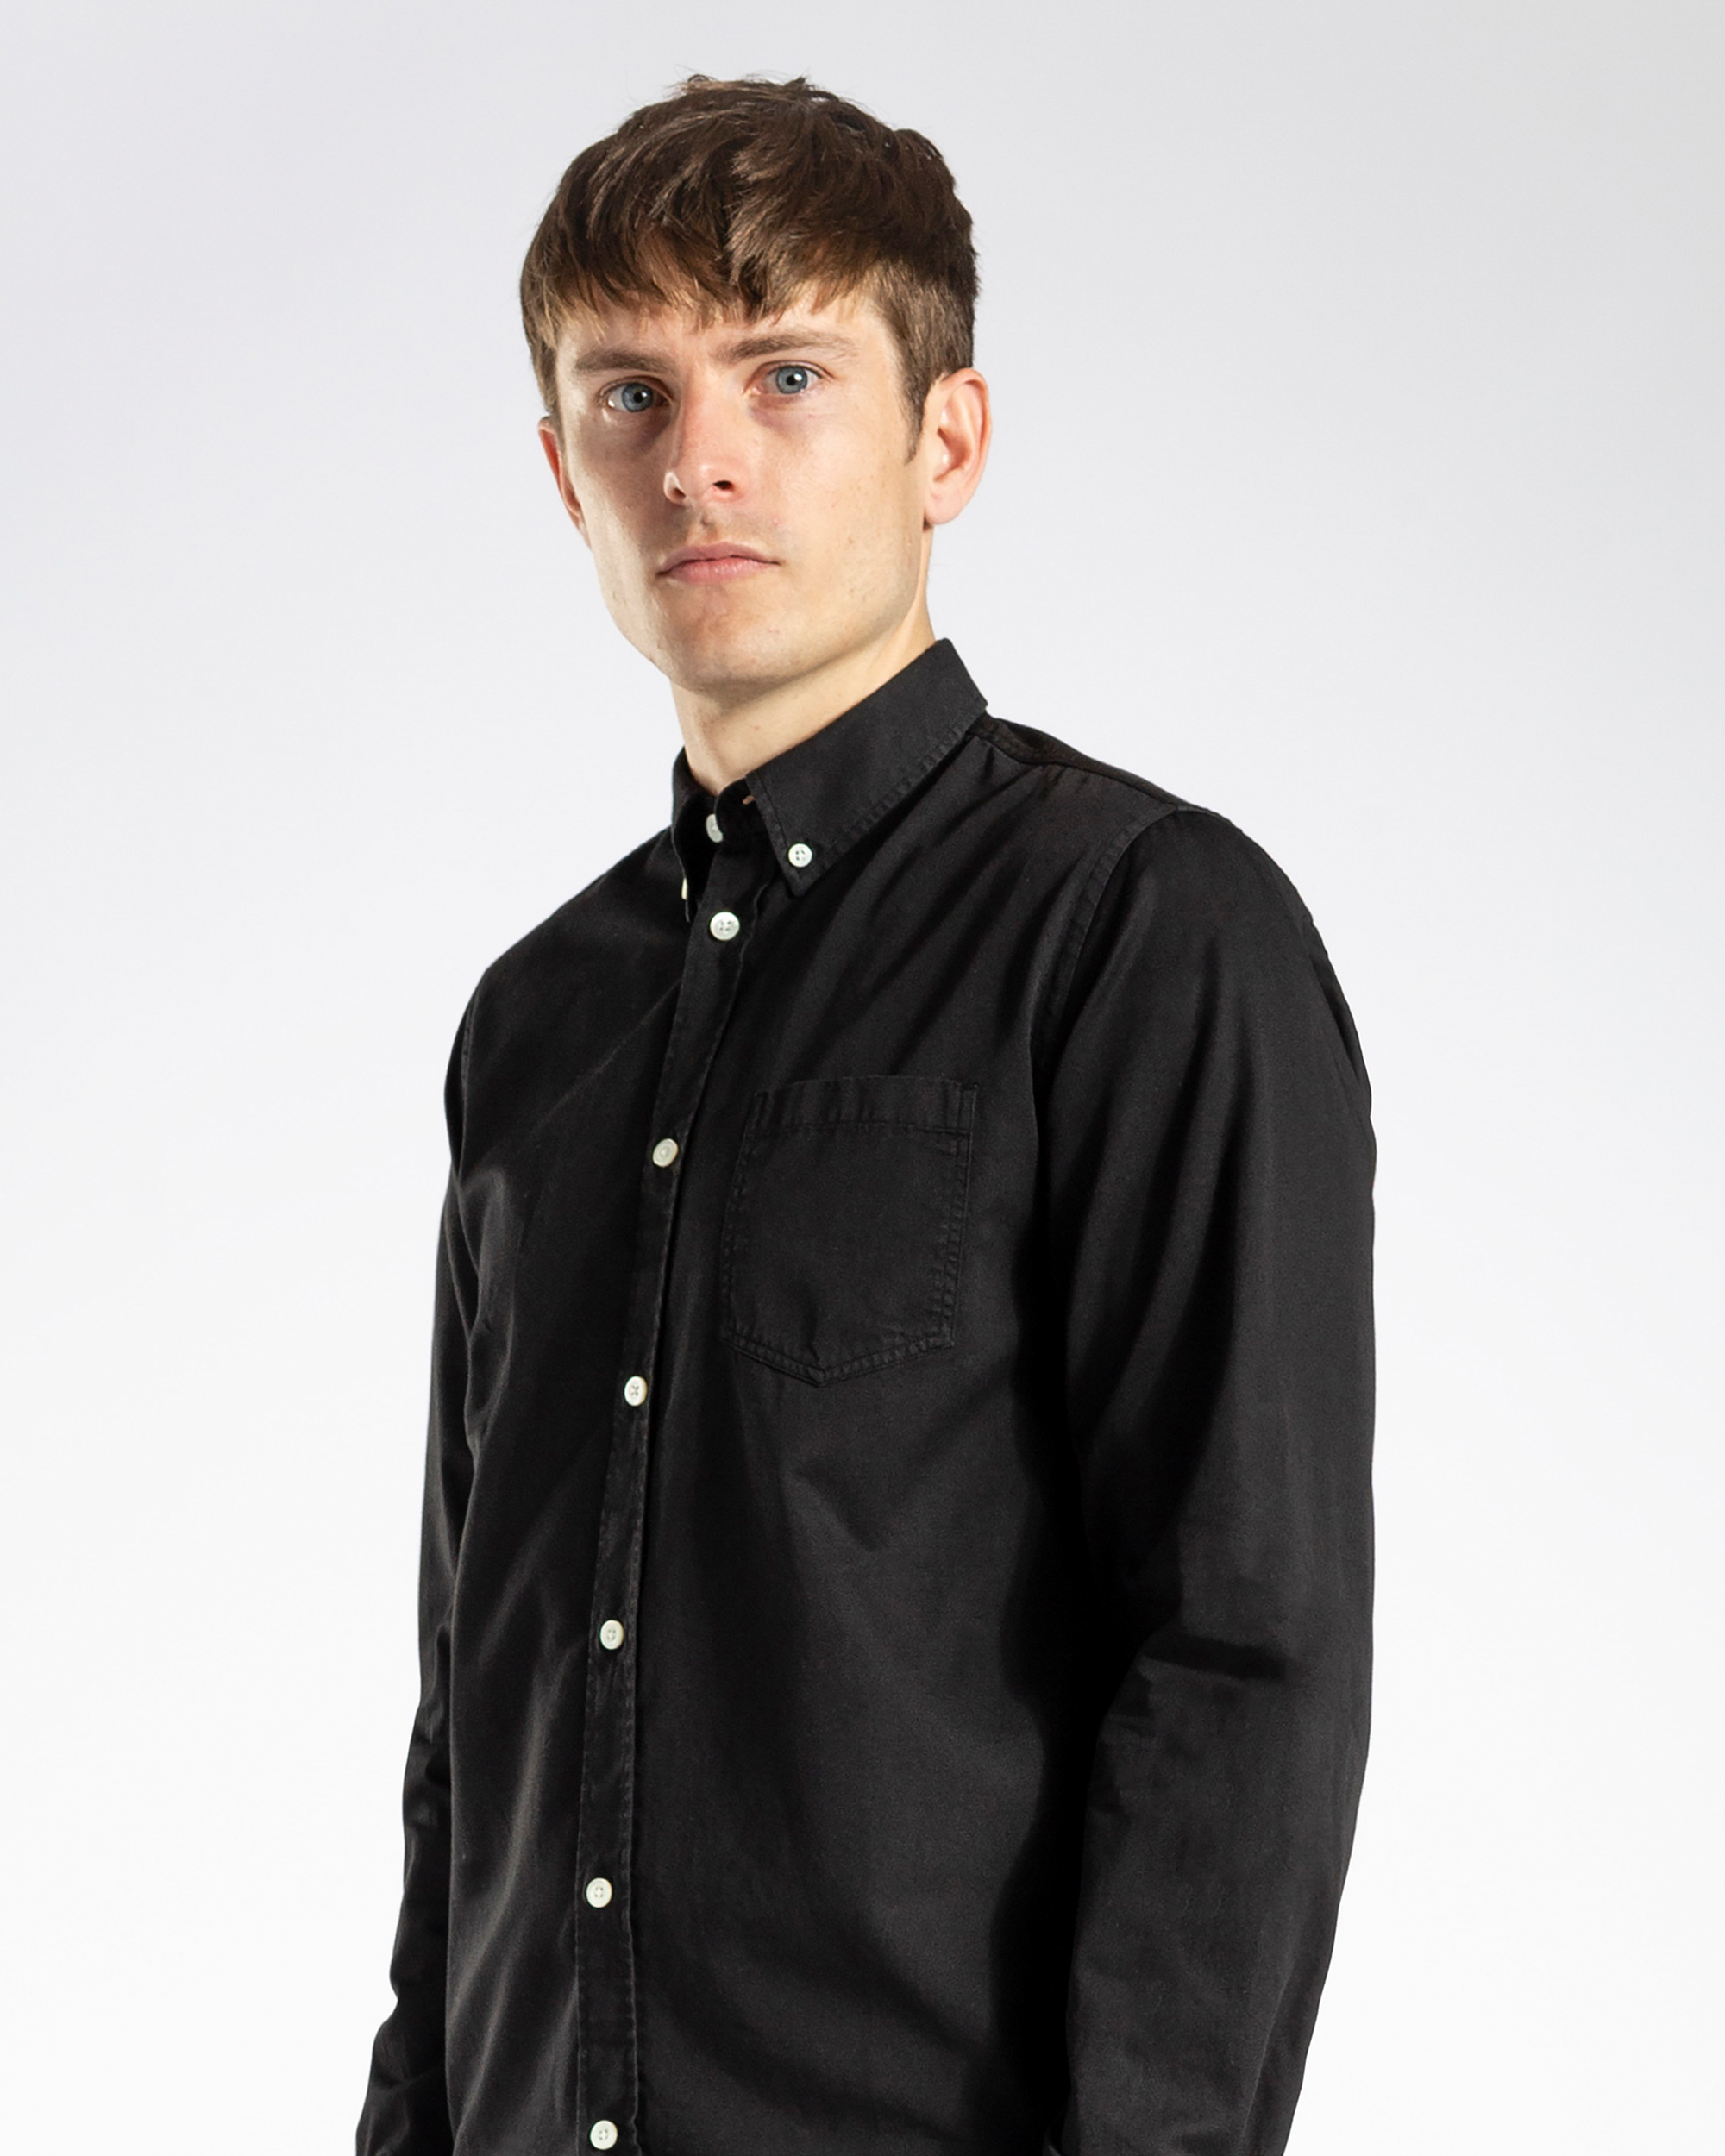 Anton Light Twill Shirt - Black